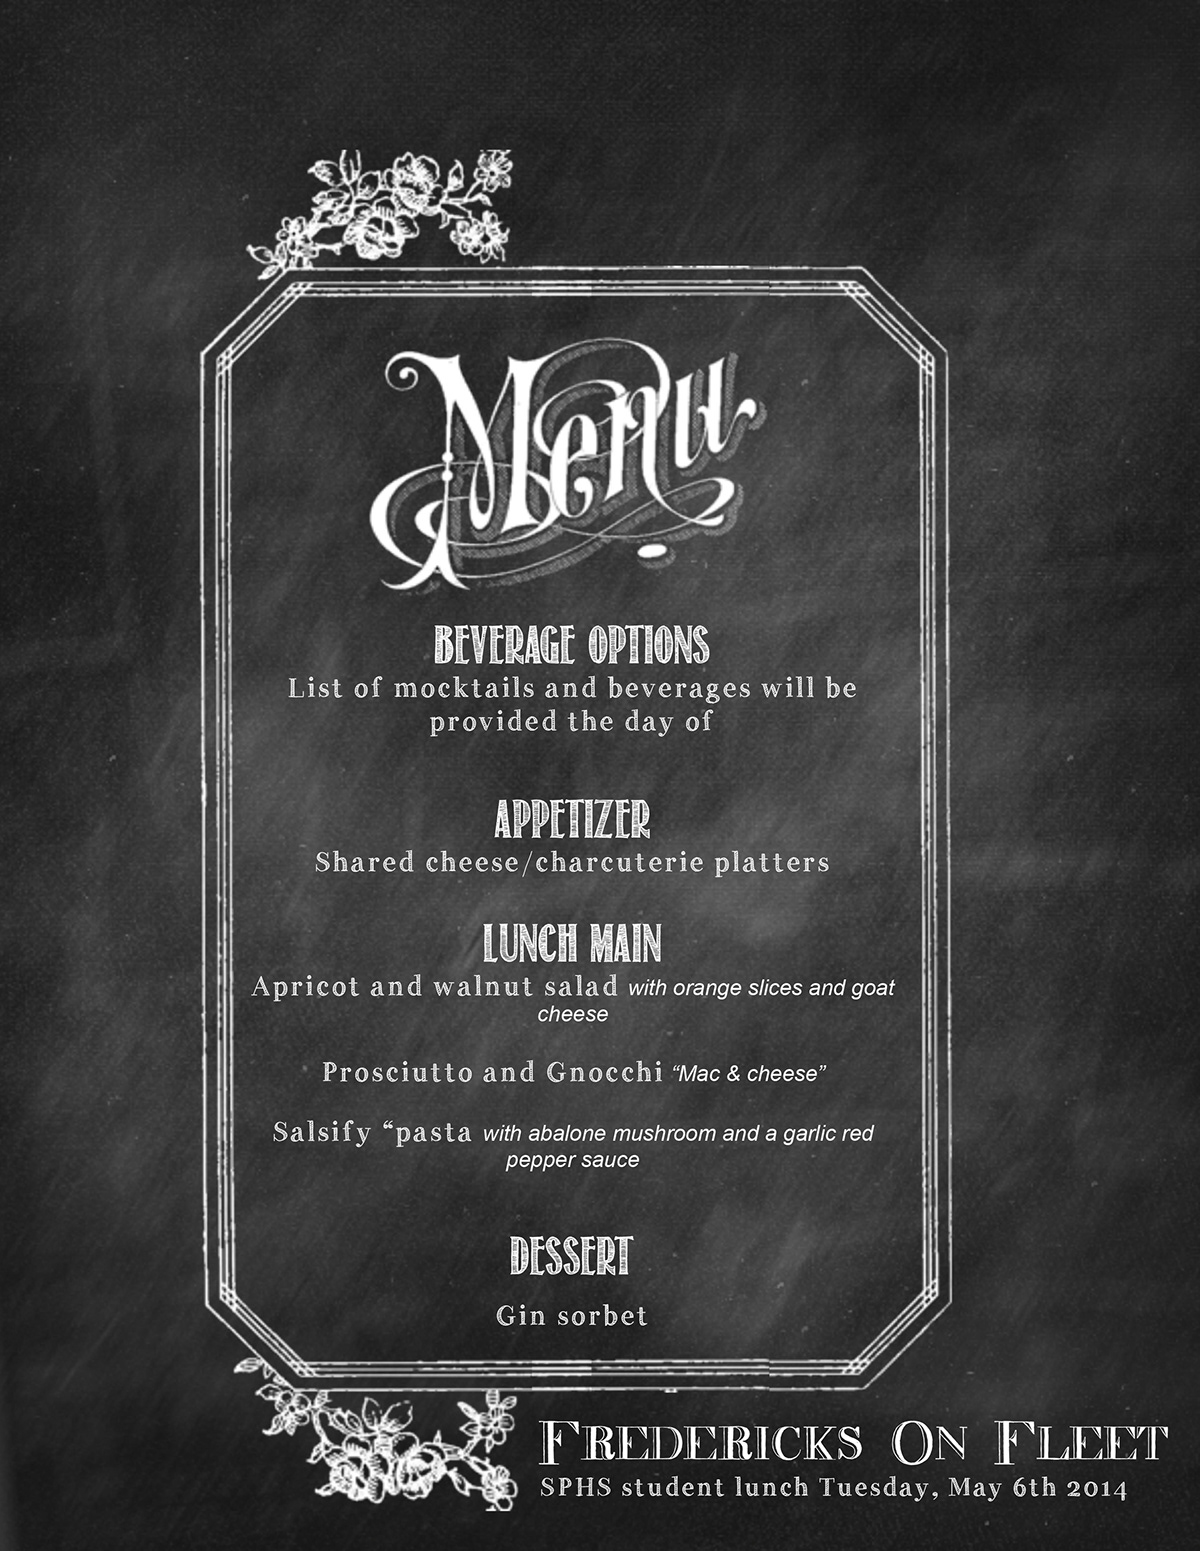 St Patricks Day st. patricks day preakness menu wedding menu menu design